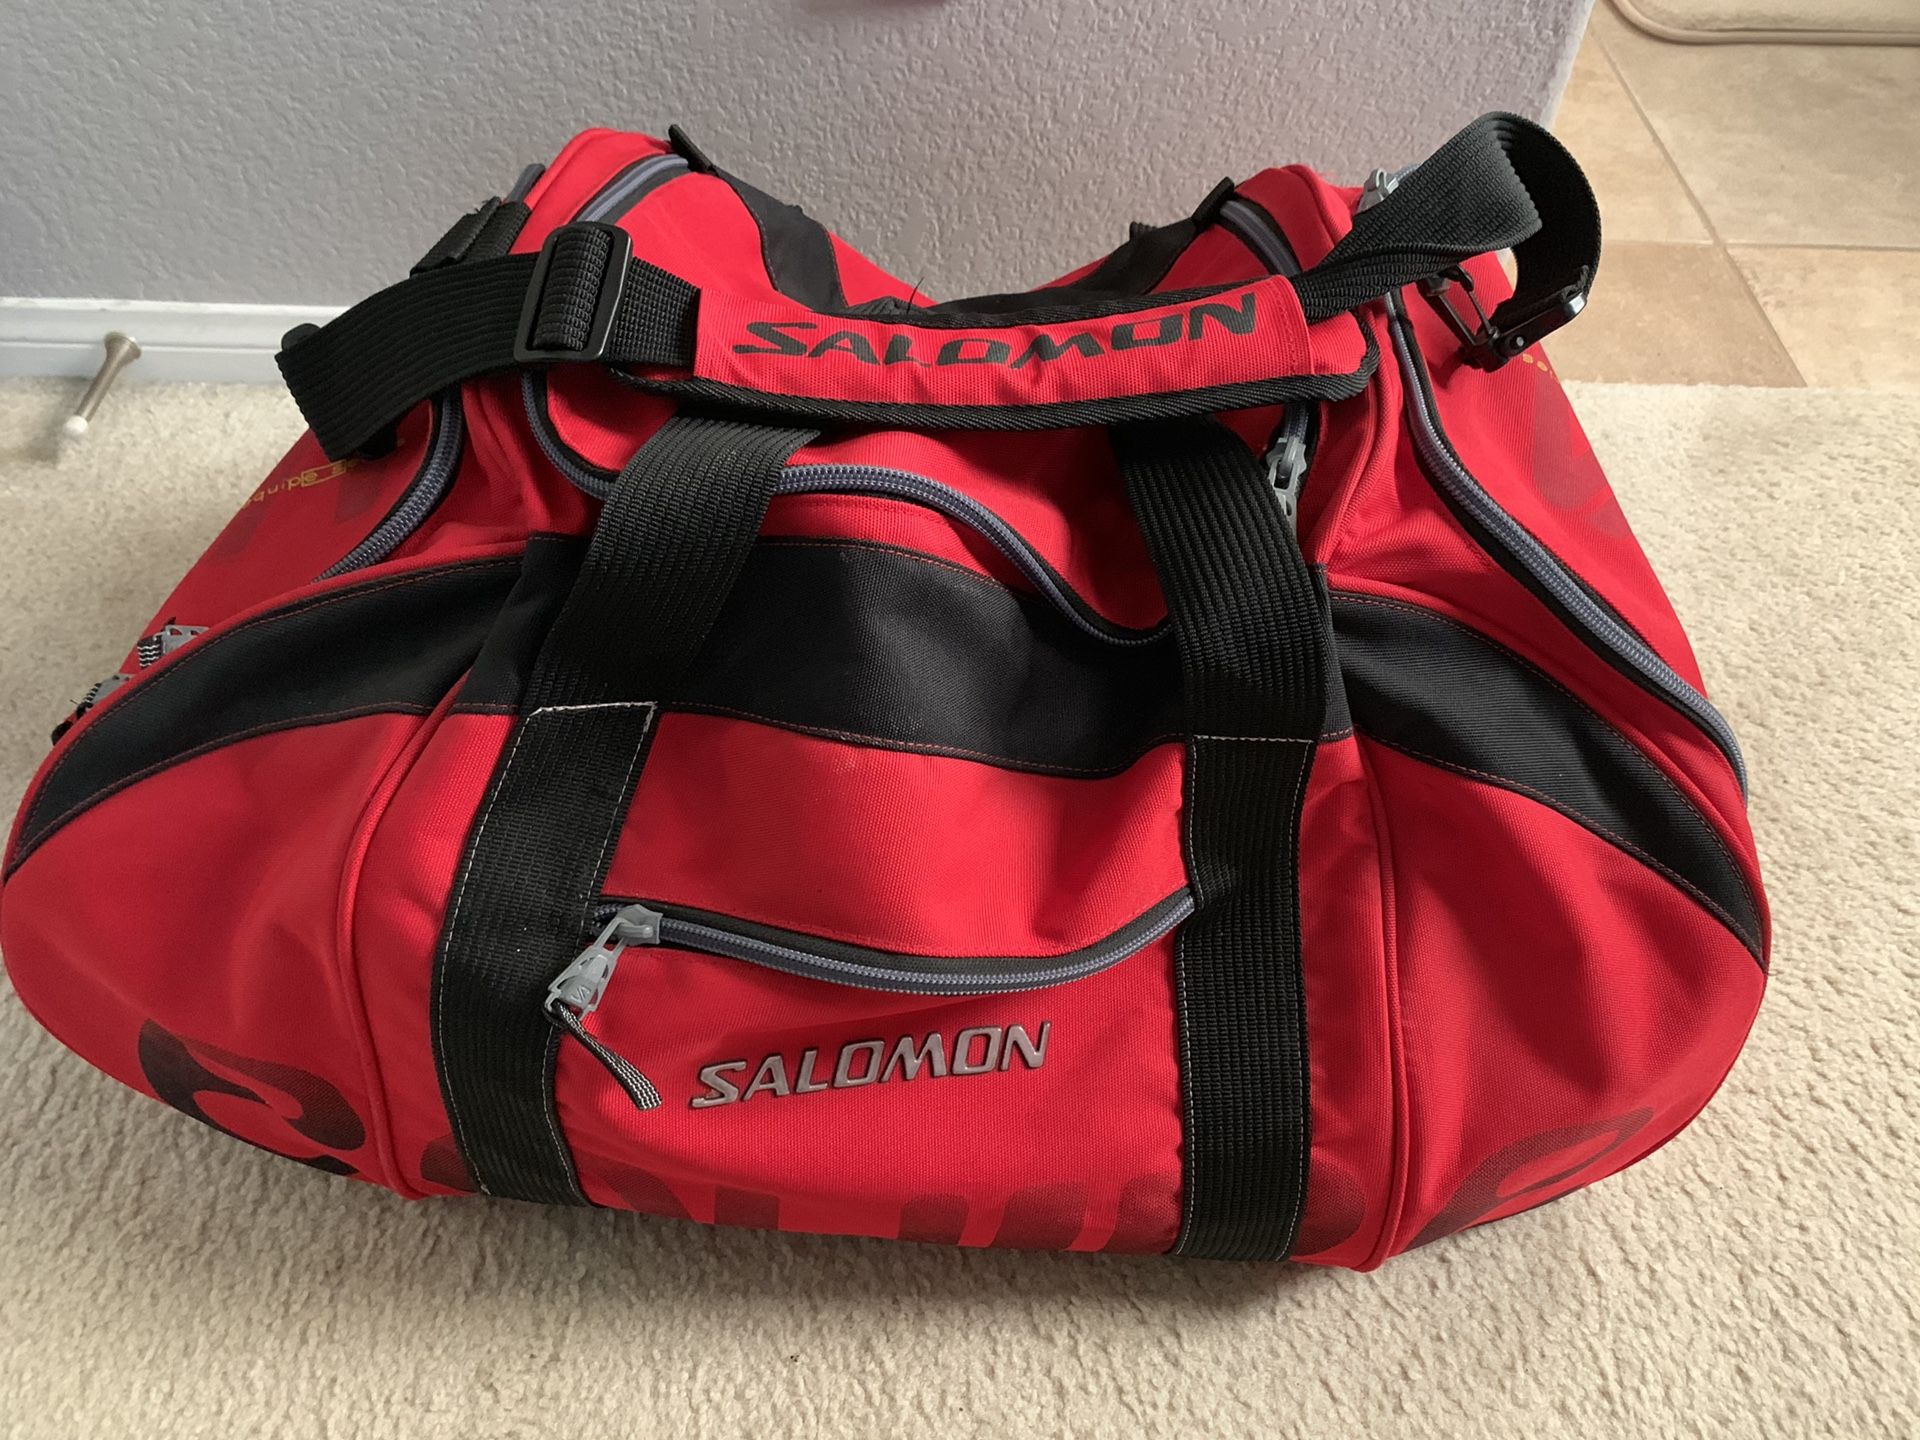 Salomon Snowboard gear bag - Practically new